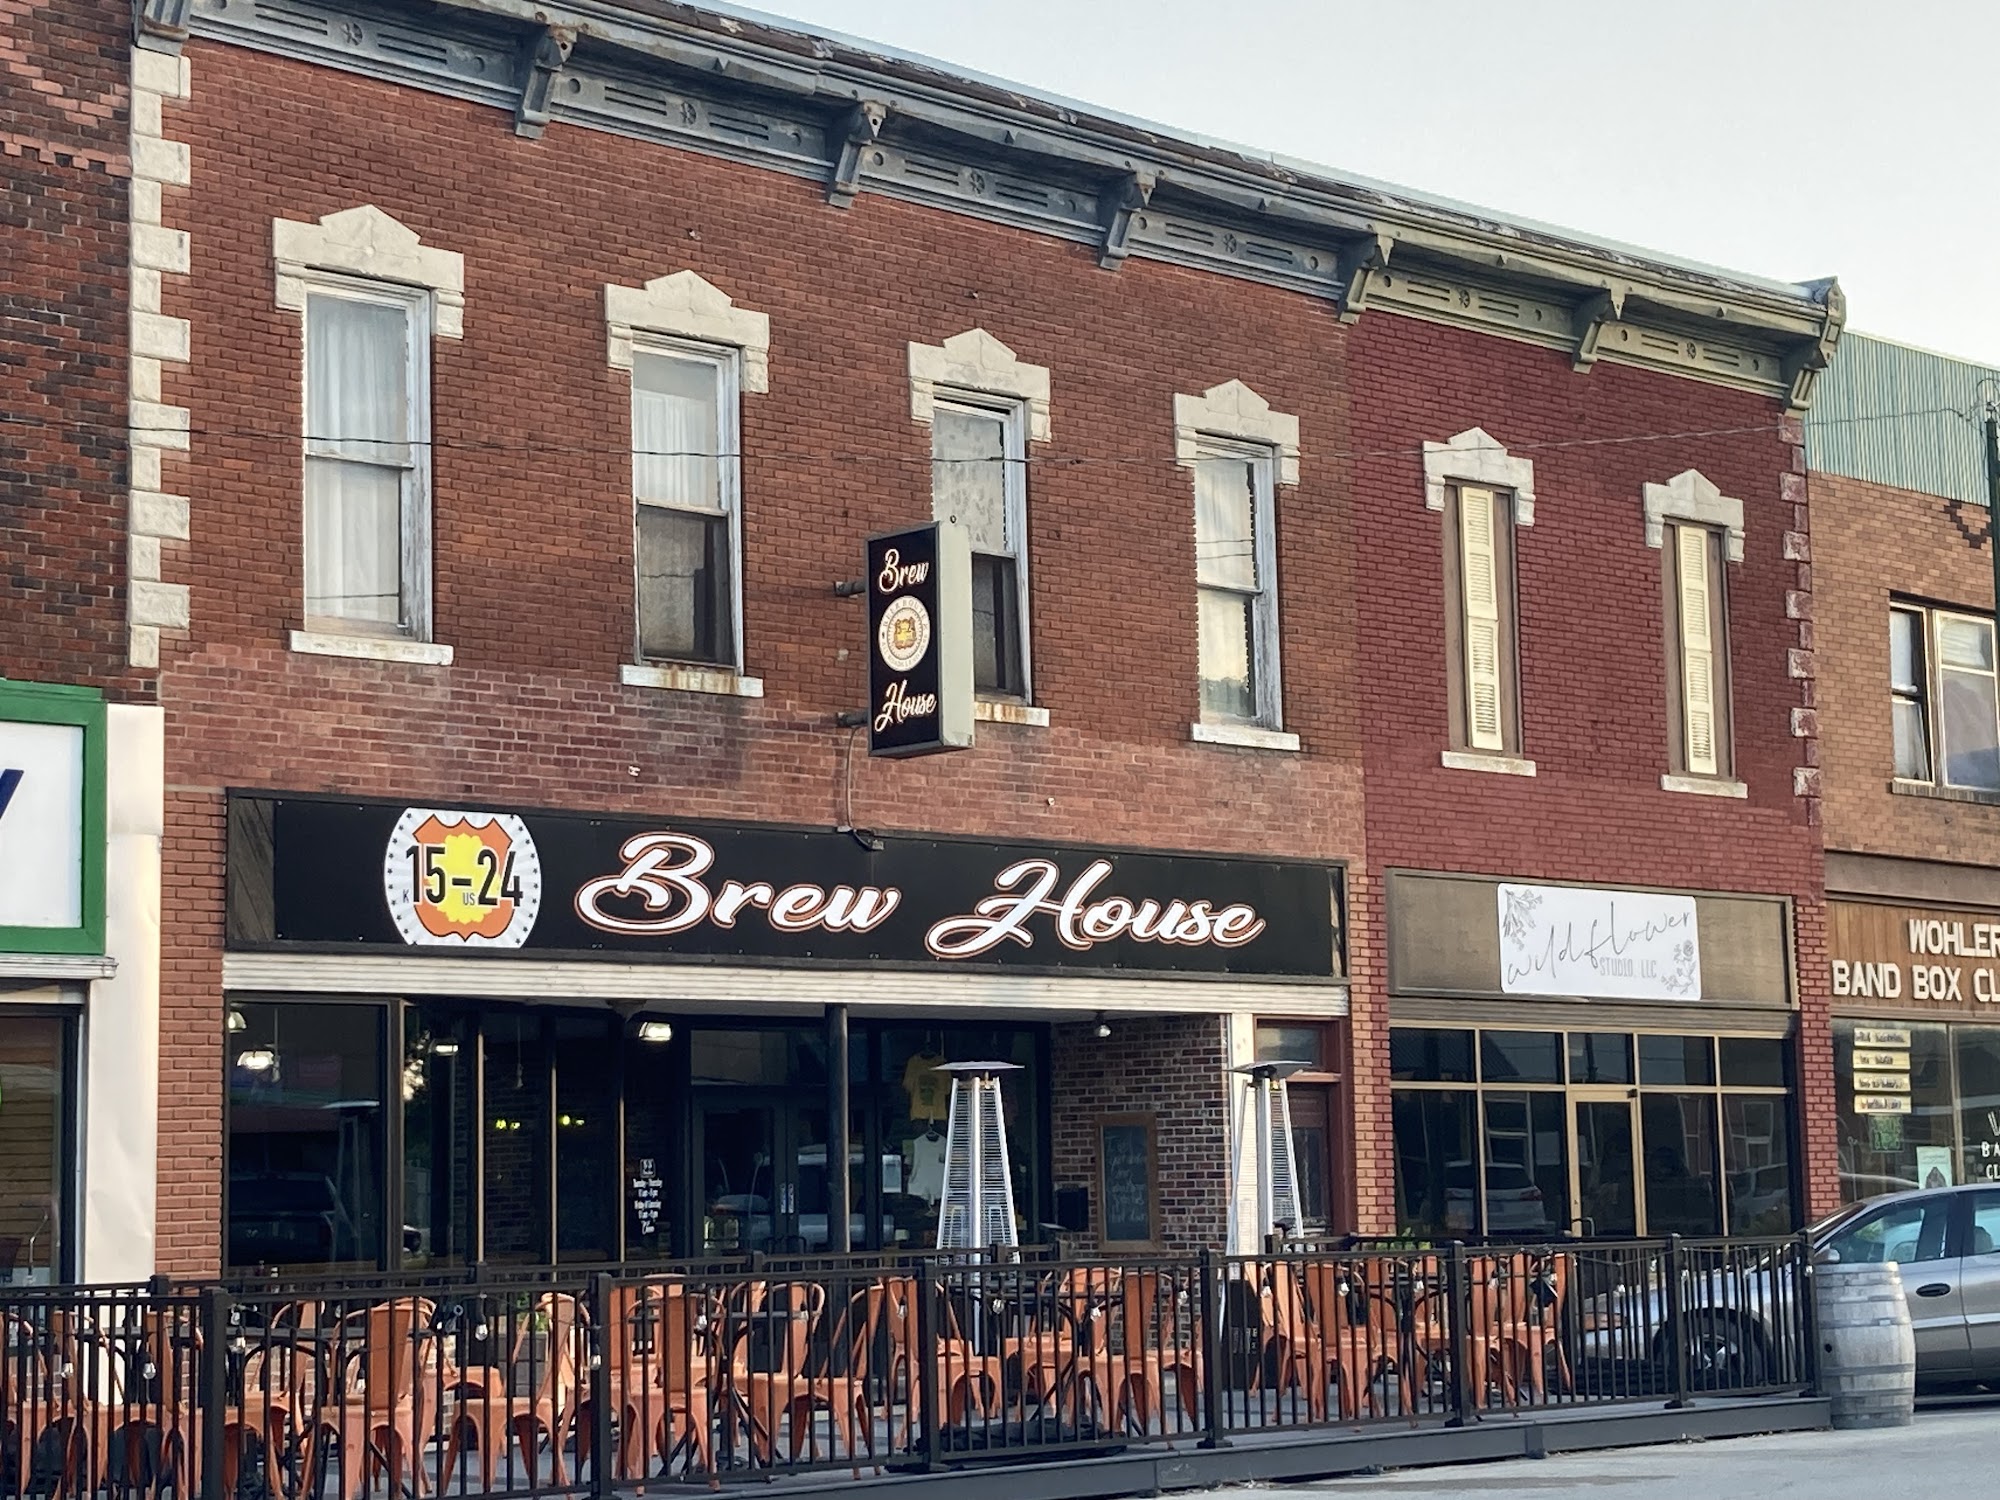 15-24 Brew House